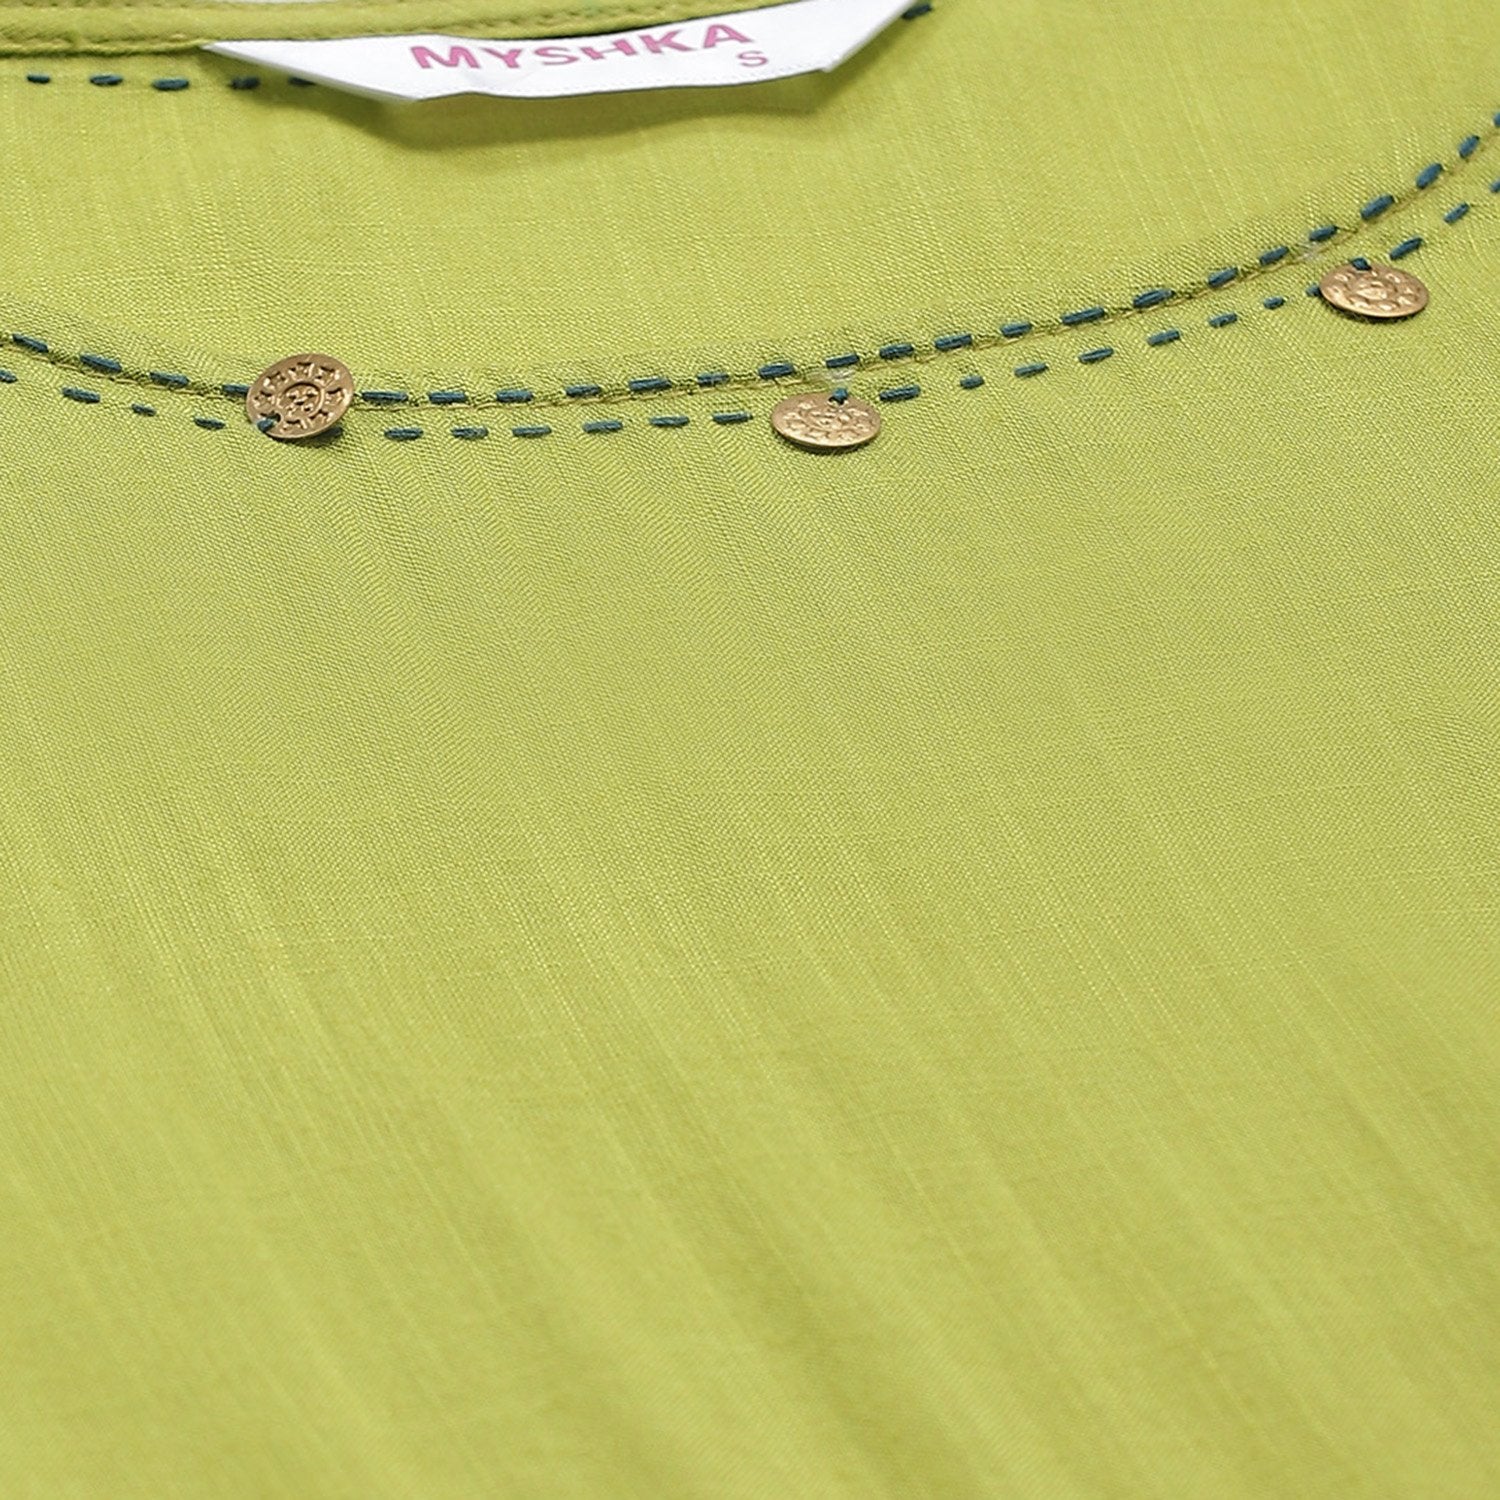 Women's Green Cotton Solid Full Sleeve Round Neck Casual Anarkali Kurta With Dupatta - Myshka